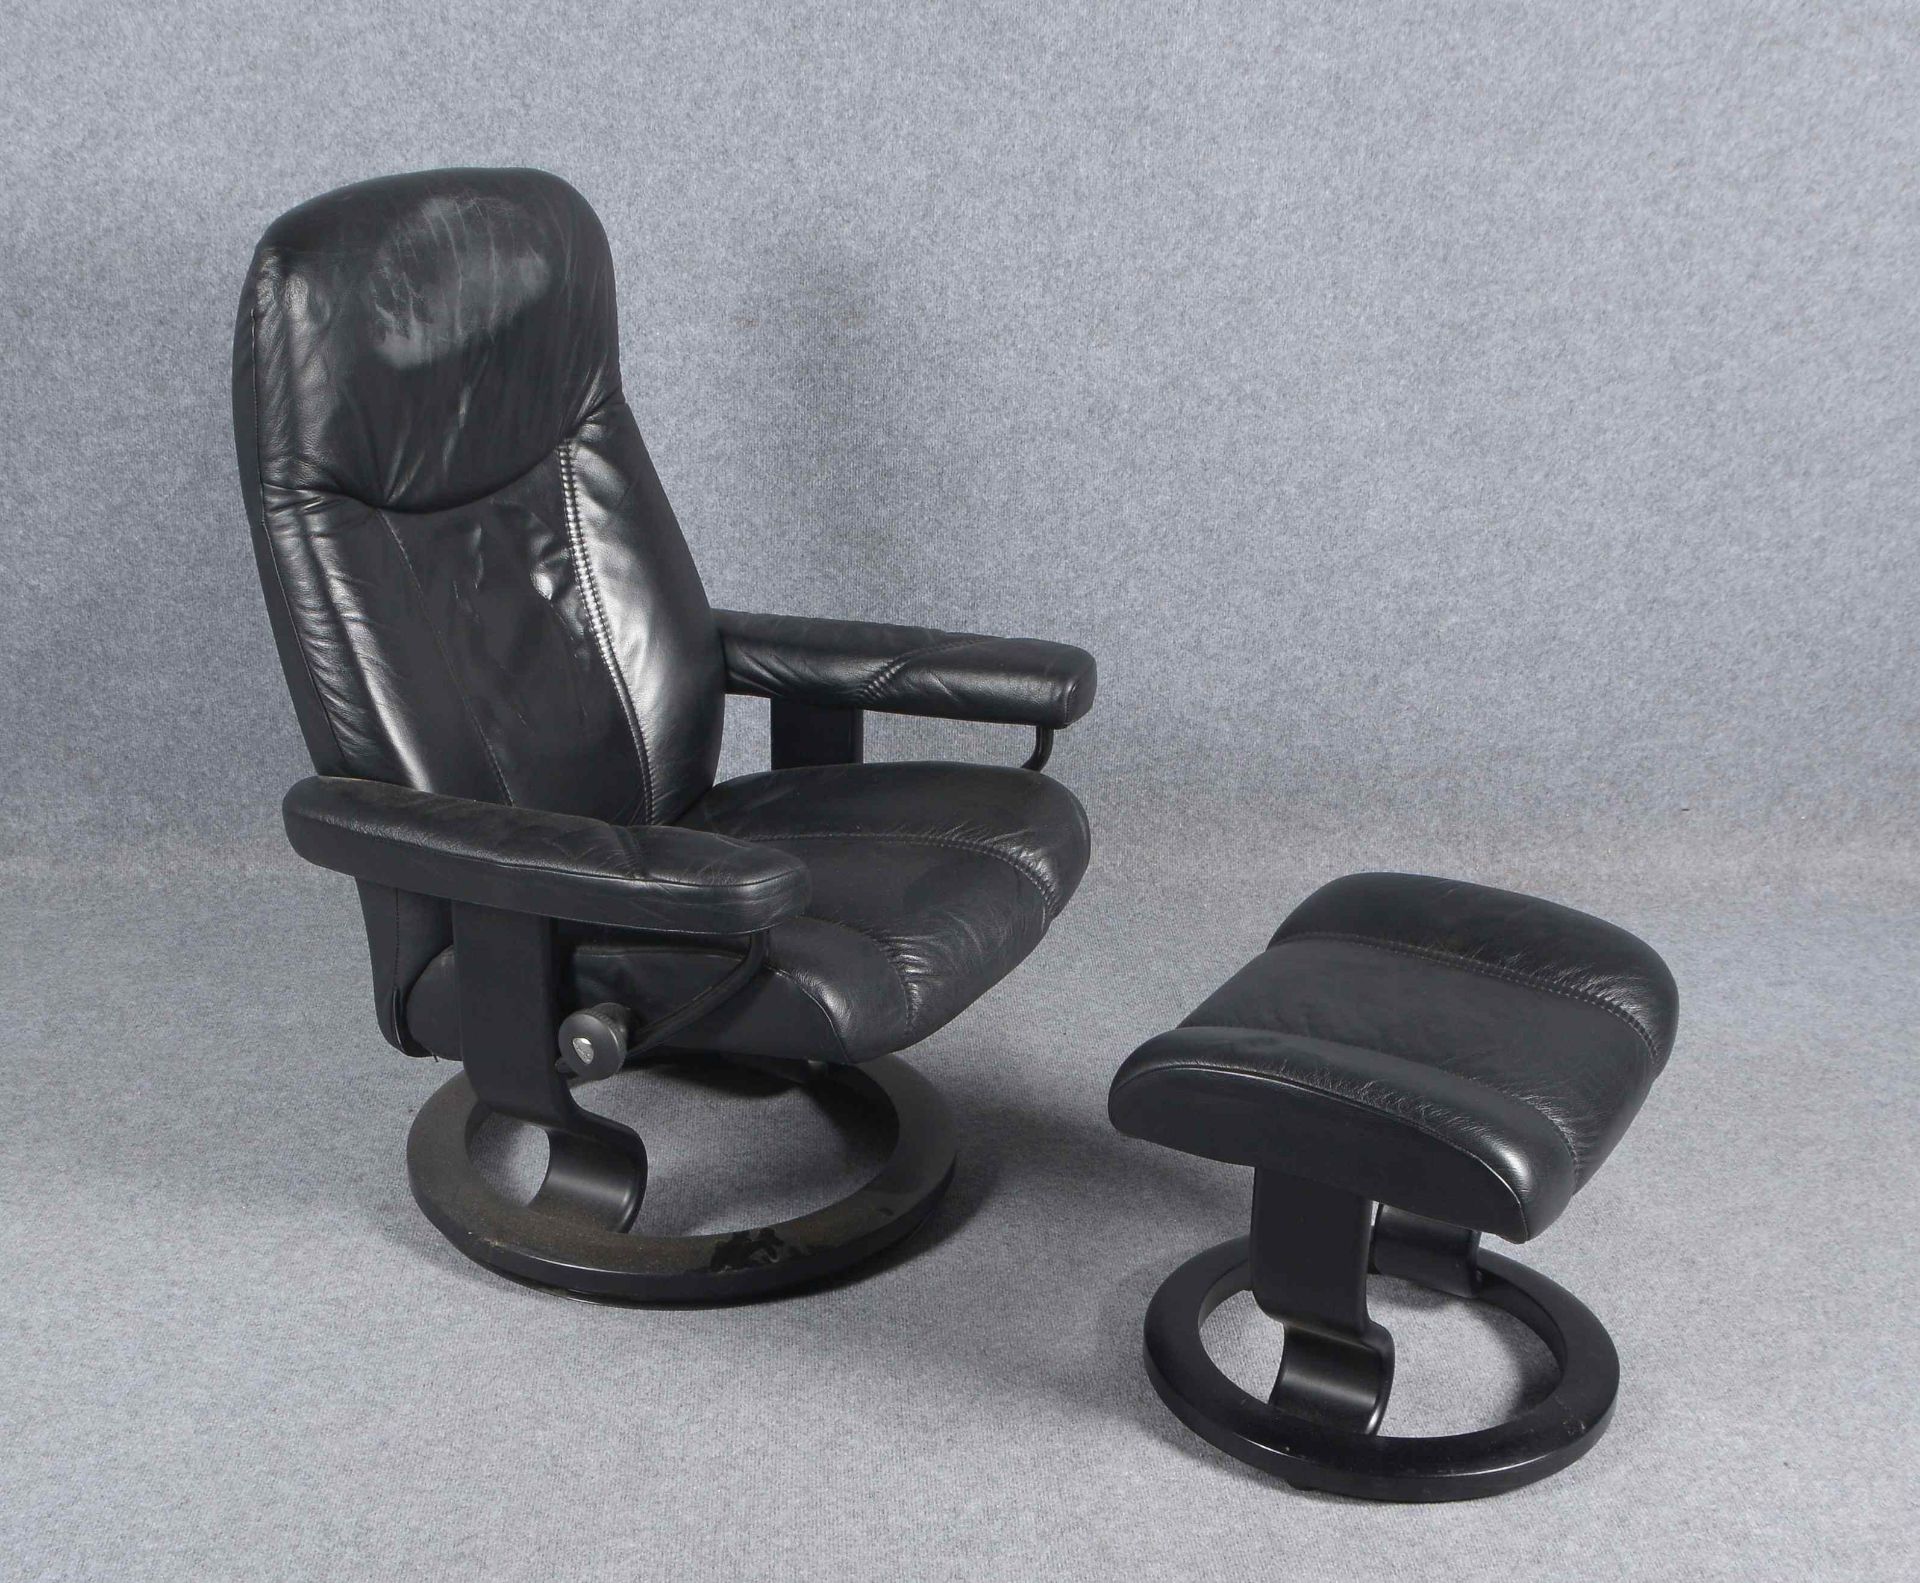 Stressless-Sessel, schwarzes Leder, auf rundem drehbarem Fu&szlig;, mit Hocker - Image 2 of 2